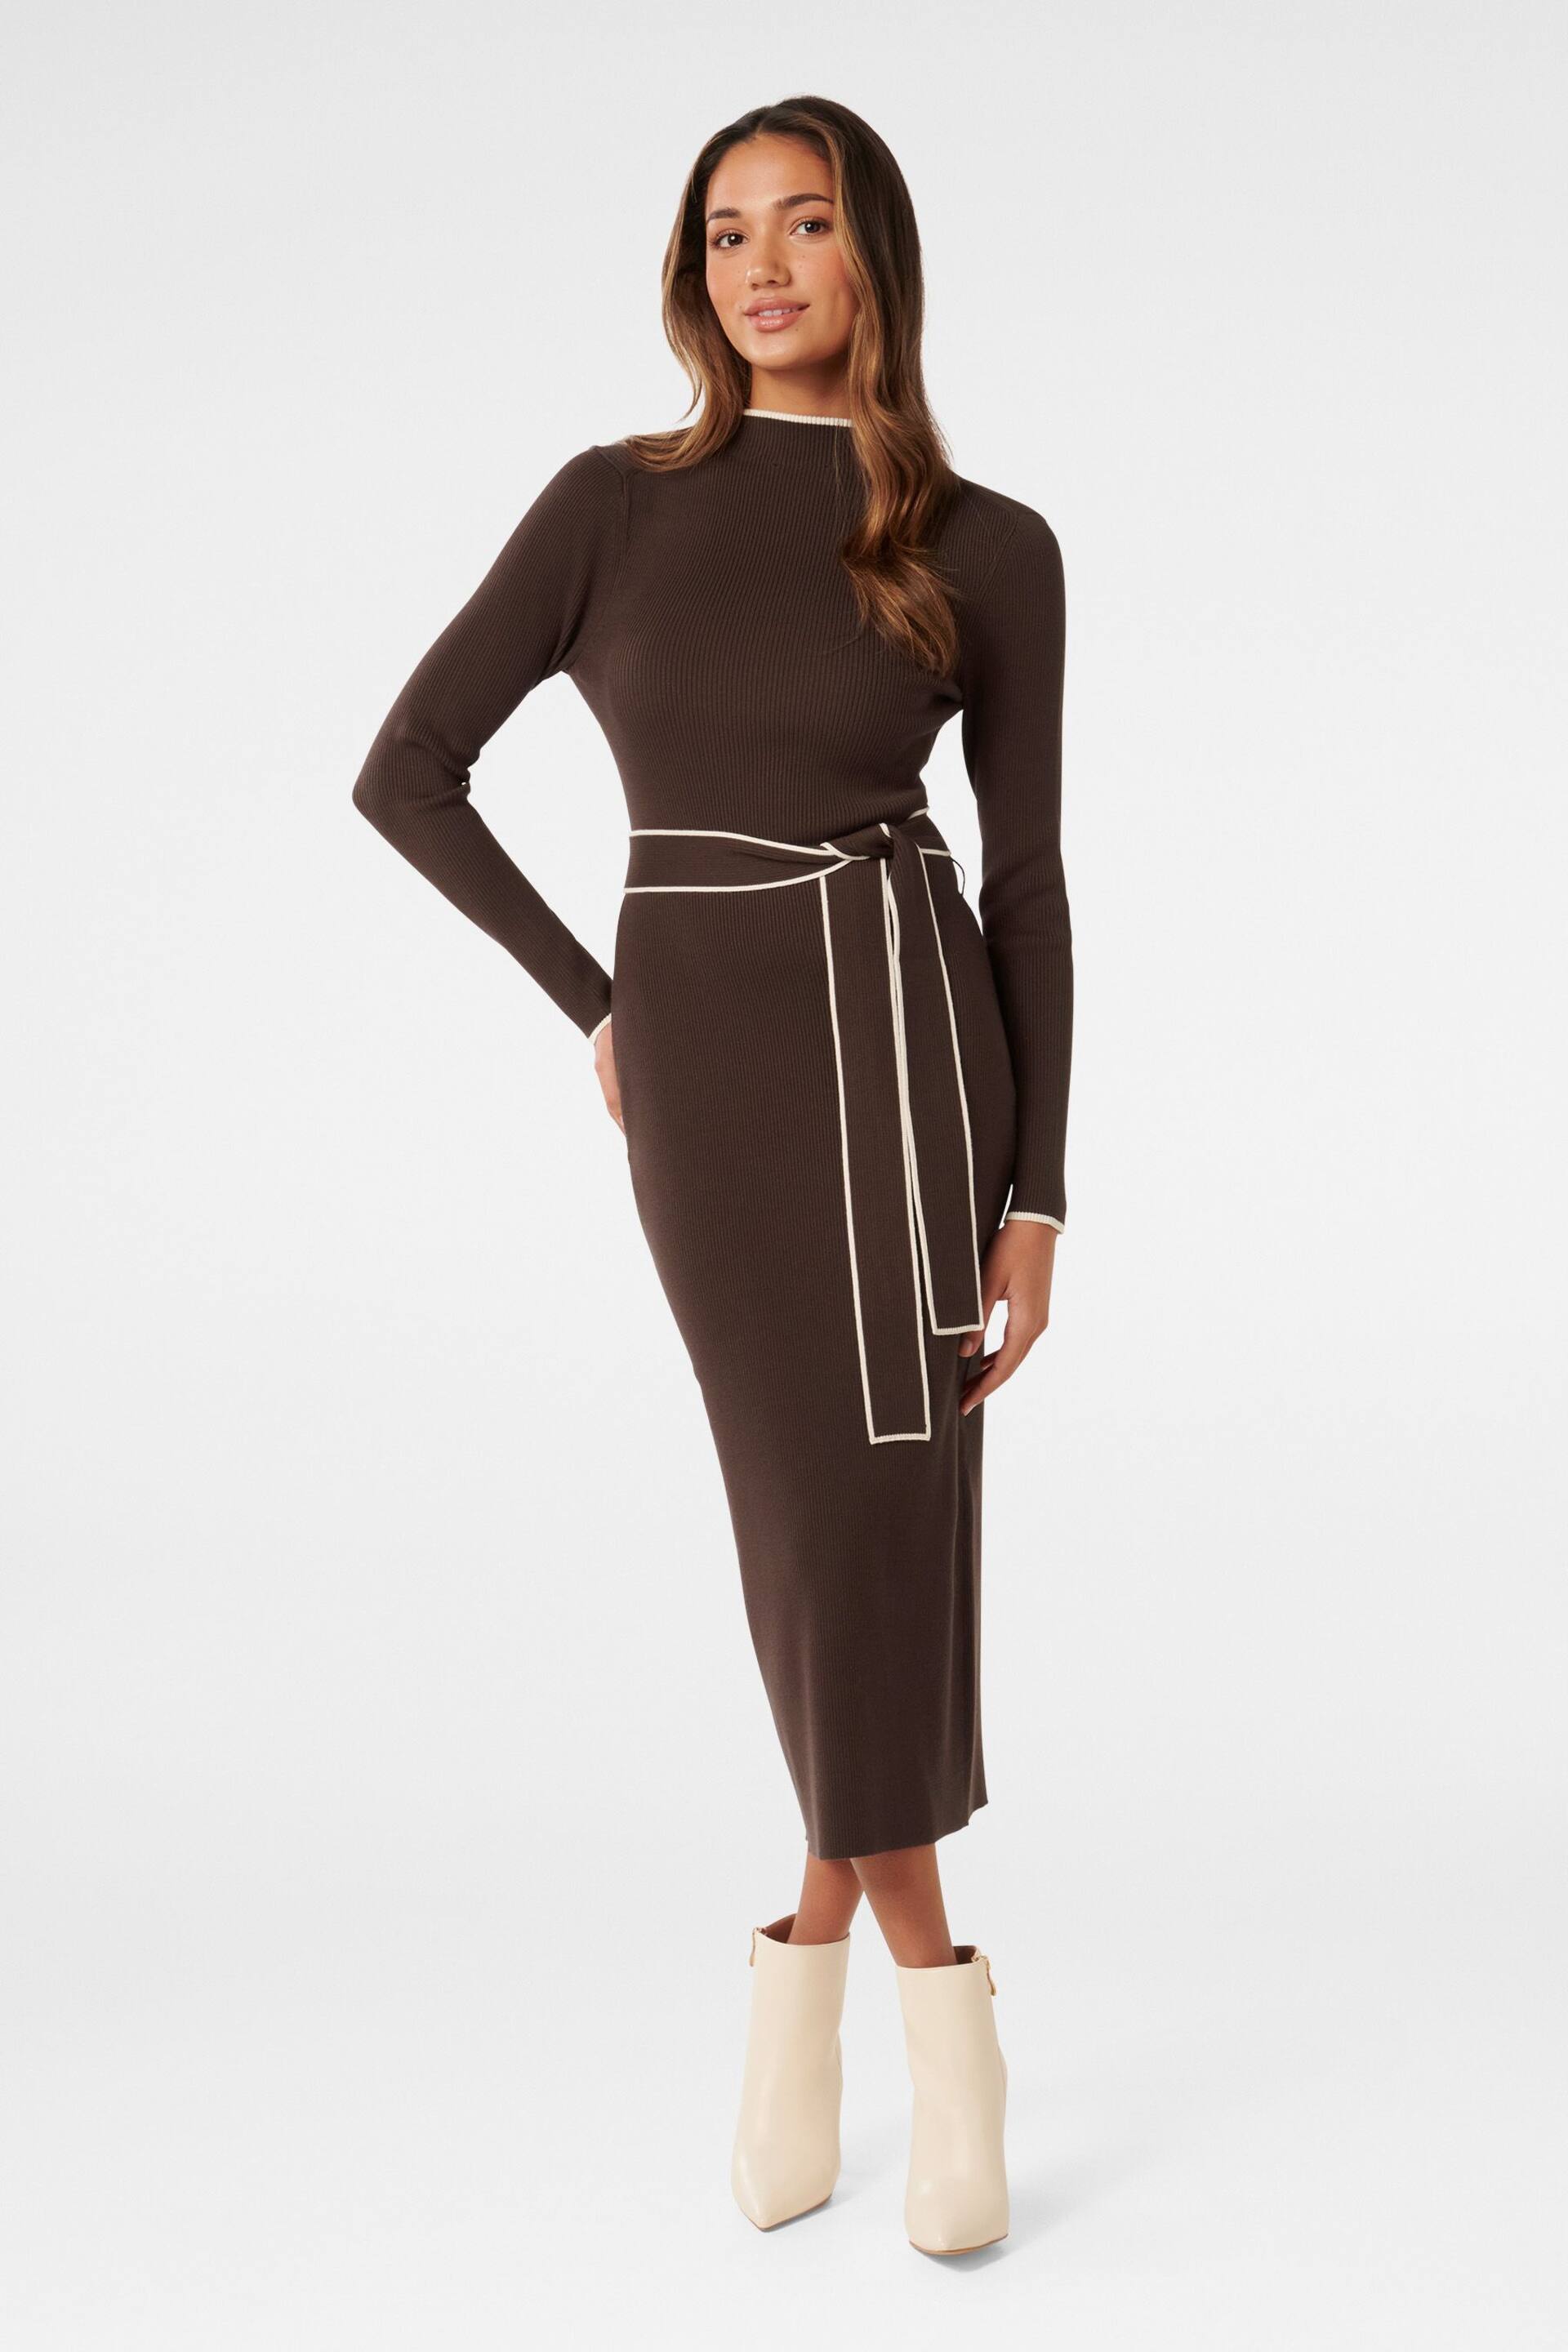 Forever New Brown Ariella Petite Knit Midi Dress - Image 1 of 4